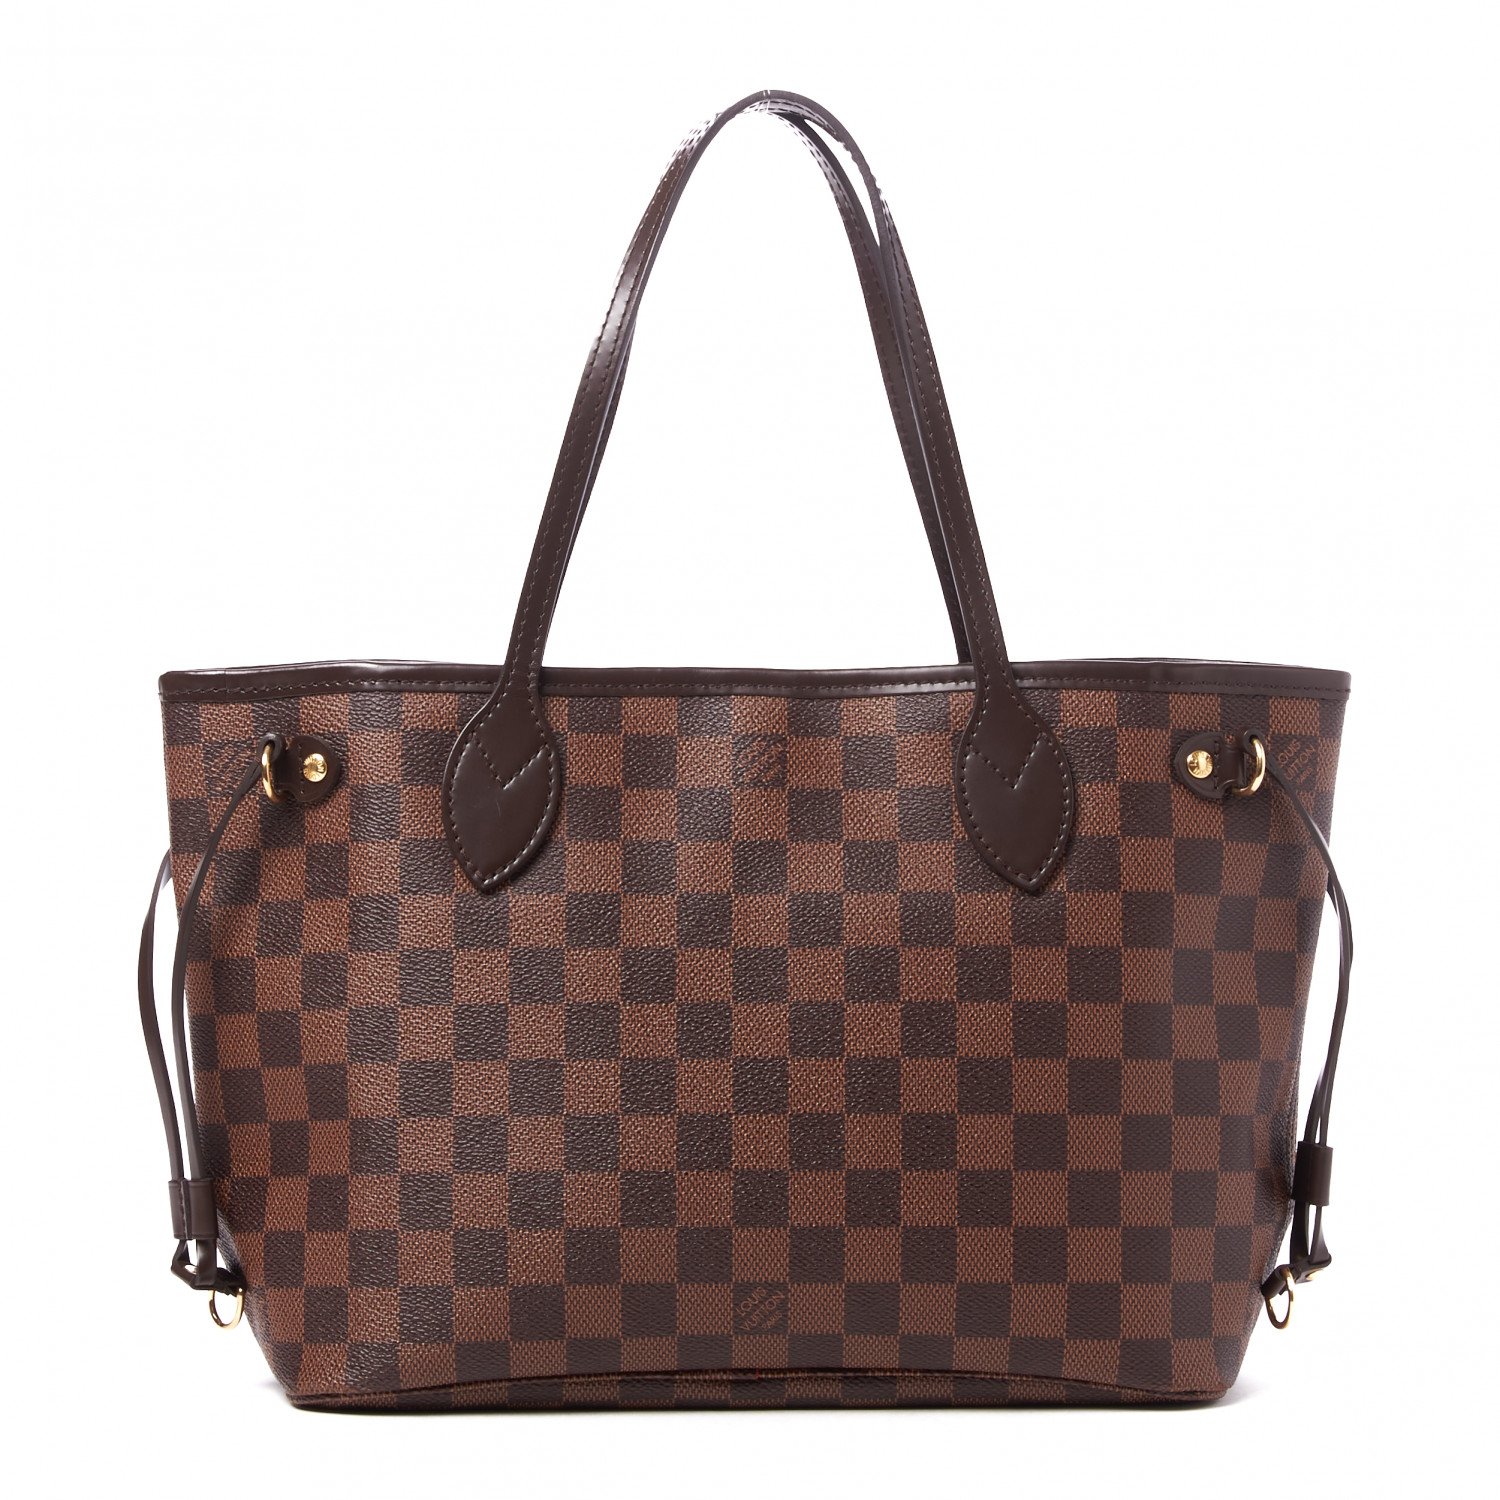 13 Most Popular Louis Vuitton Handbags & Purses Paisley & Sparrow